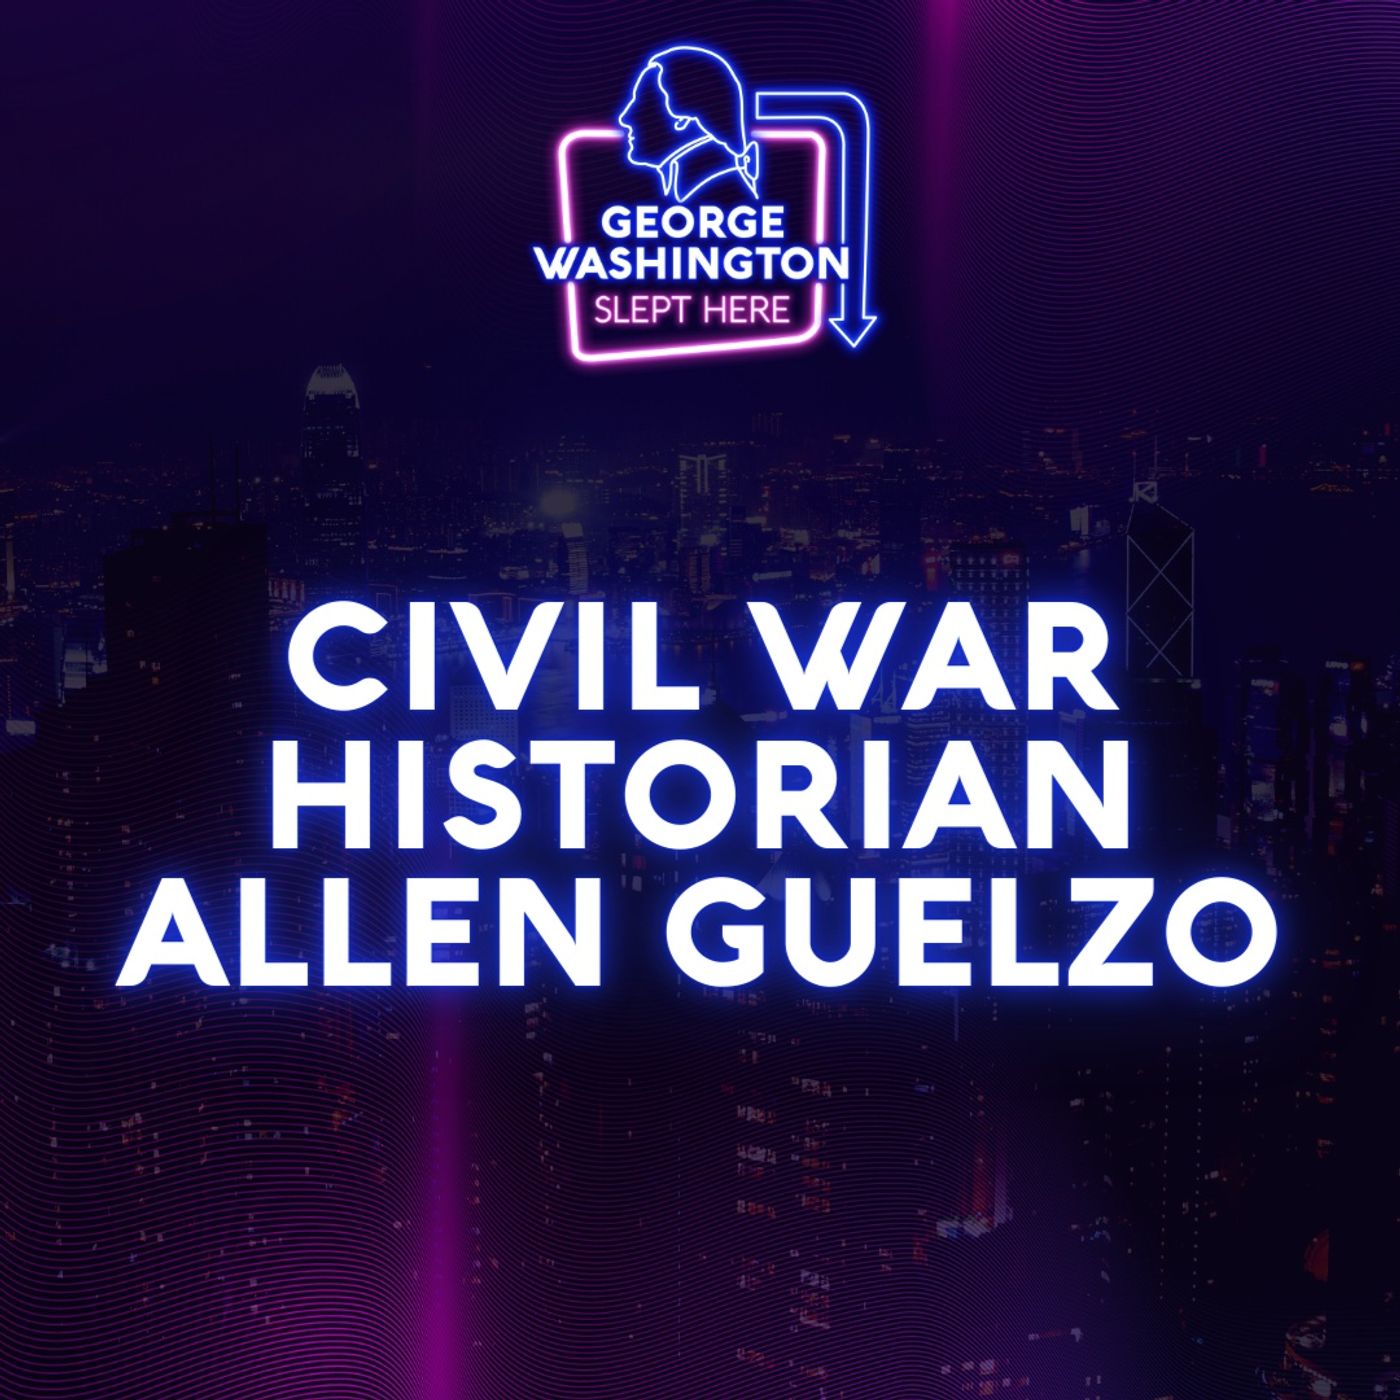 Civil War Historian Allen Guelzo